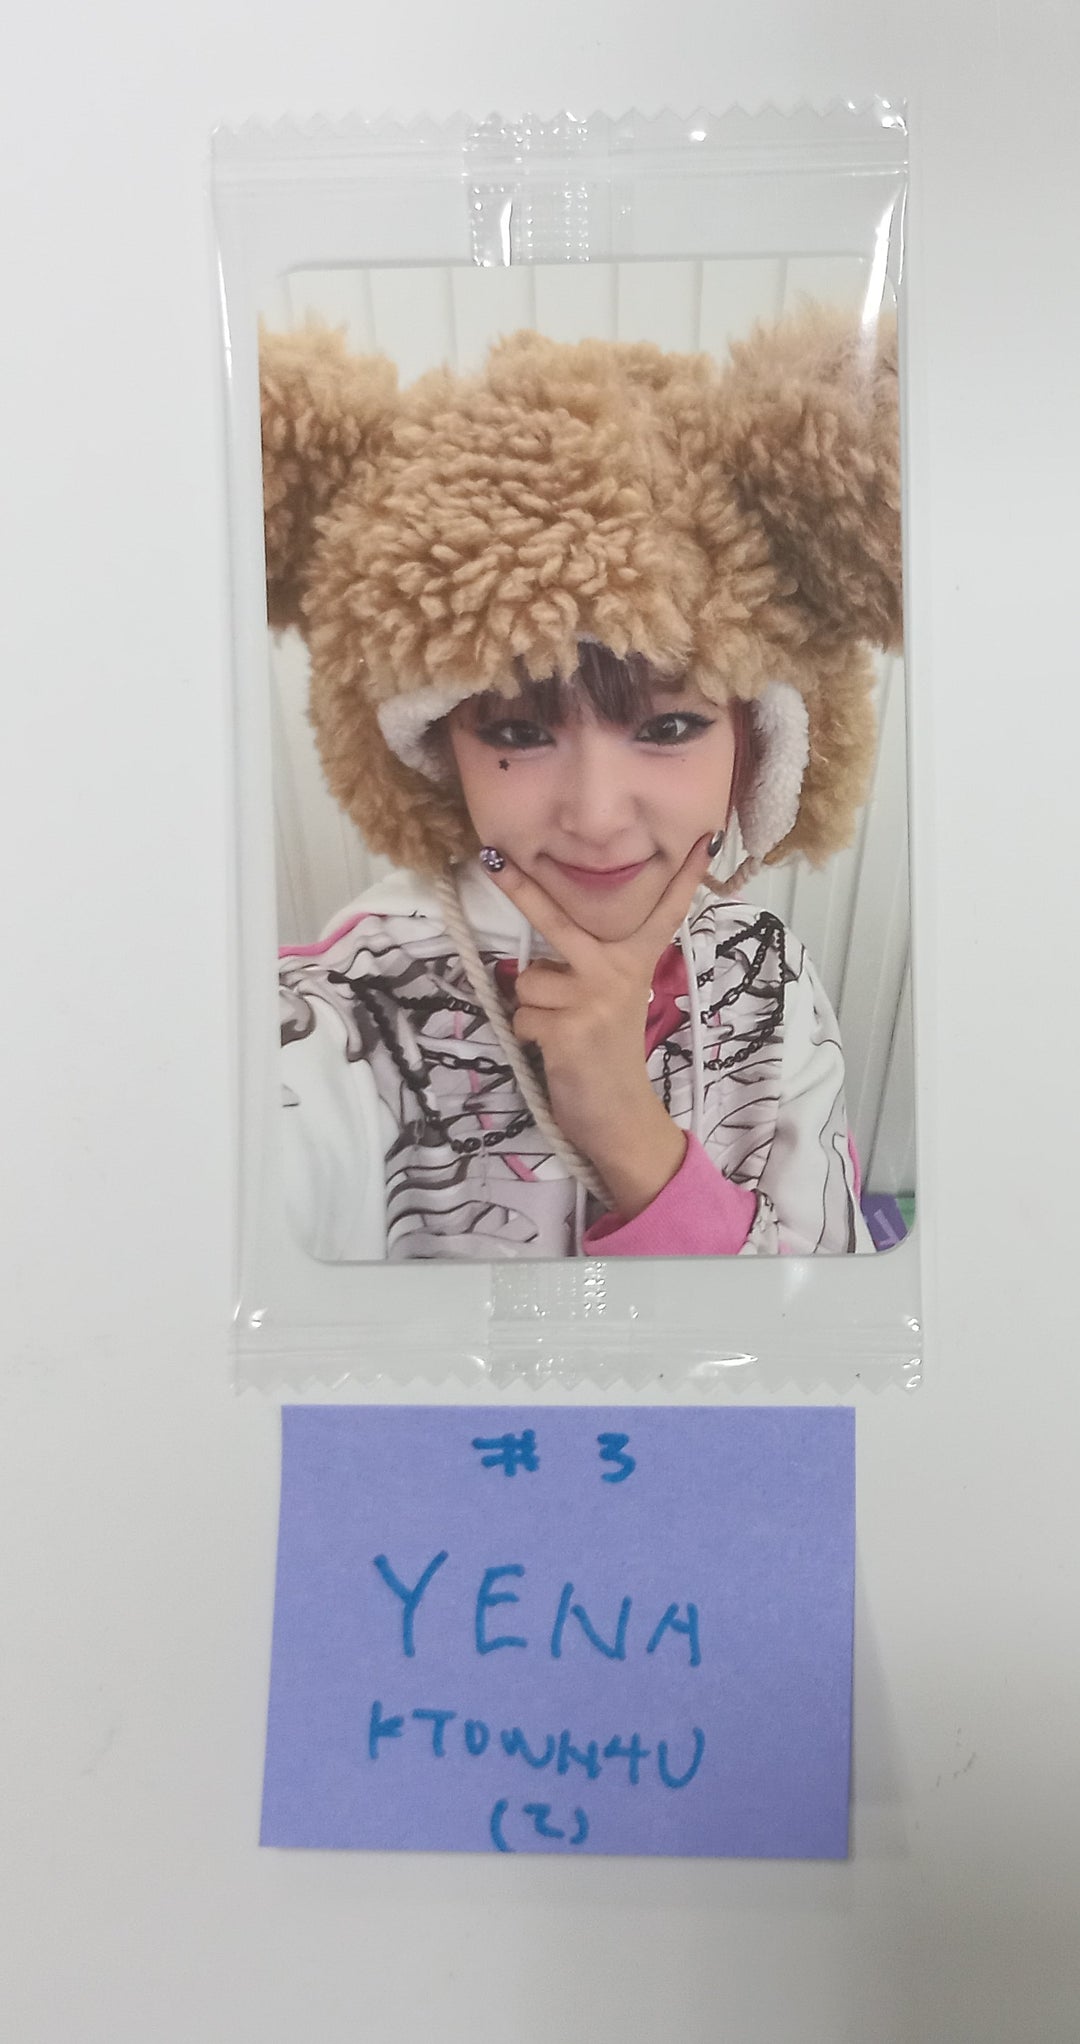 YENA "Good Morning" - Ktown4U Fansign Event Photocard [24.2.19]